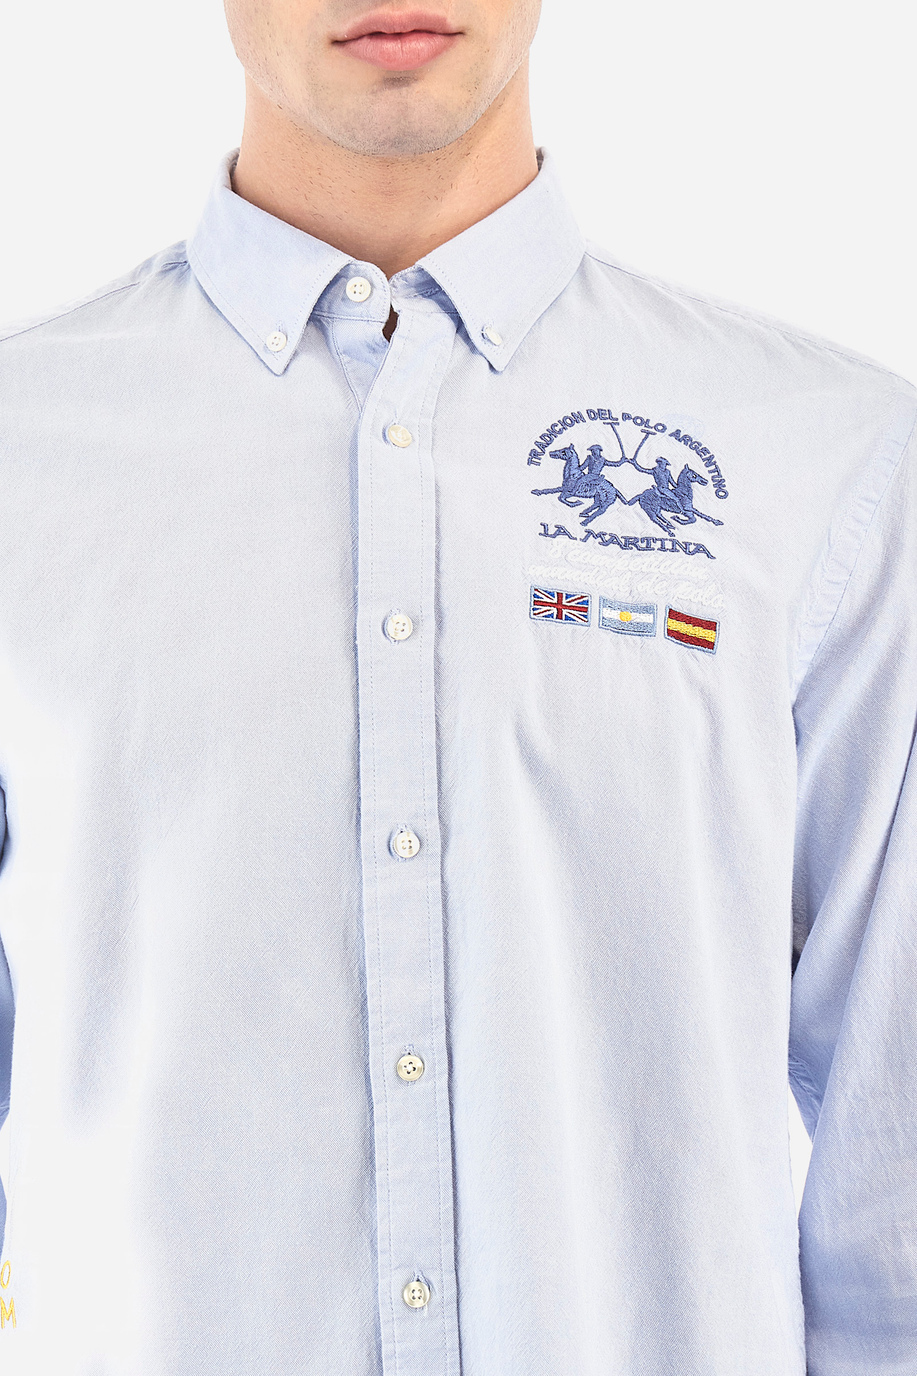 Men's regular fit long-sleeved shirt in cotton - Vilelmo - Gift ideas for him | La Martina - Official Online Shop